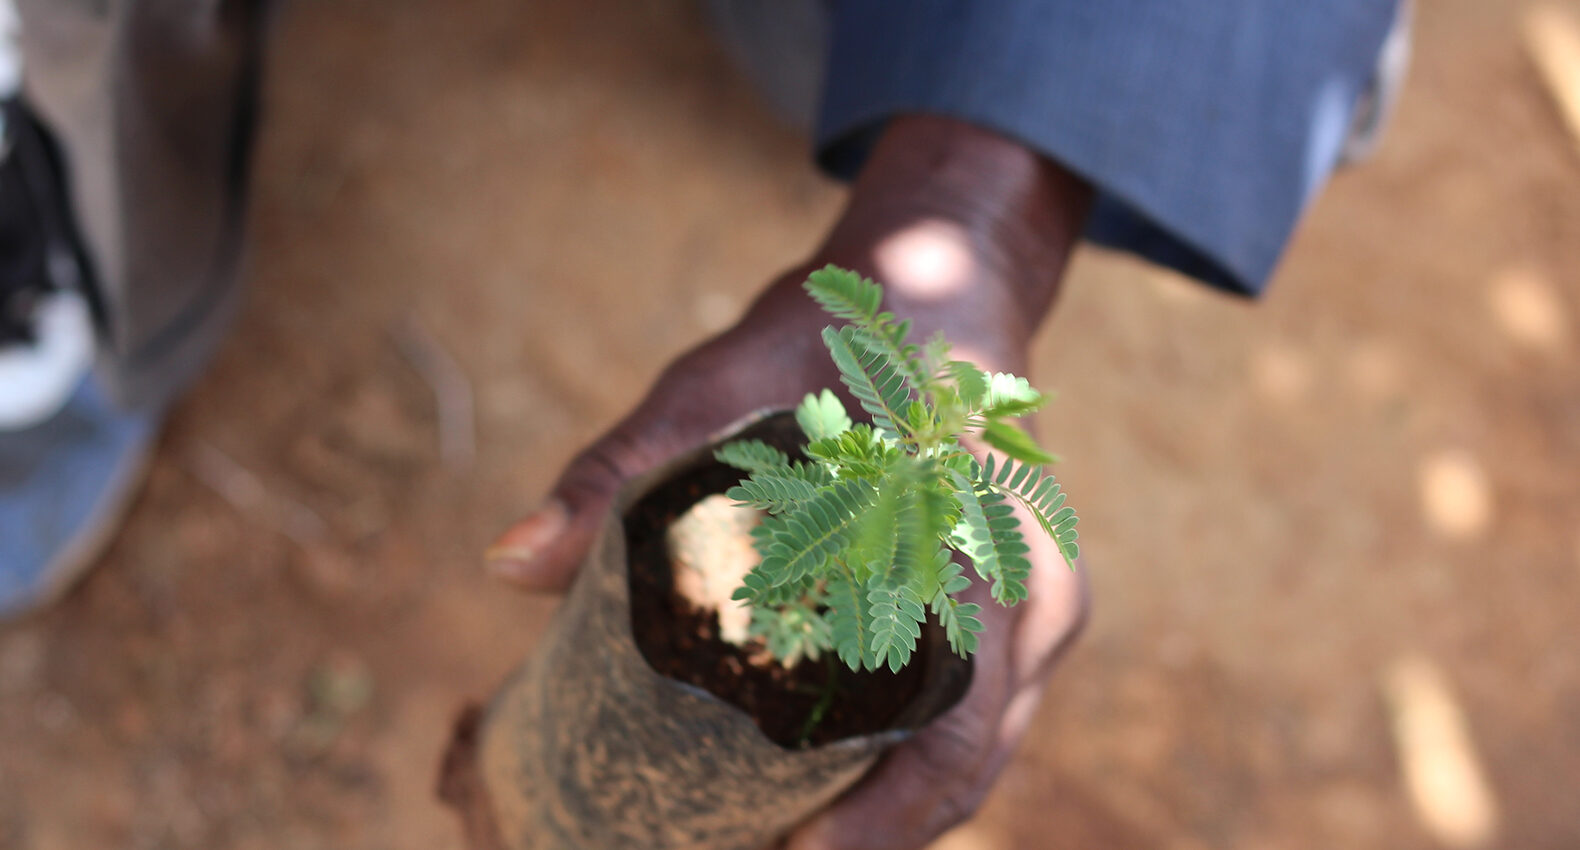 Planting new tree Tanzania Trees for the future